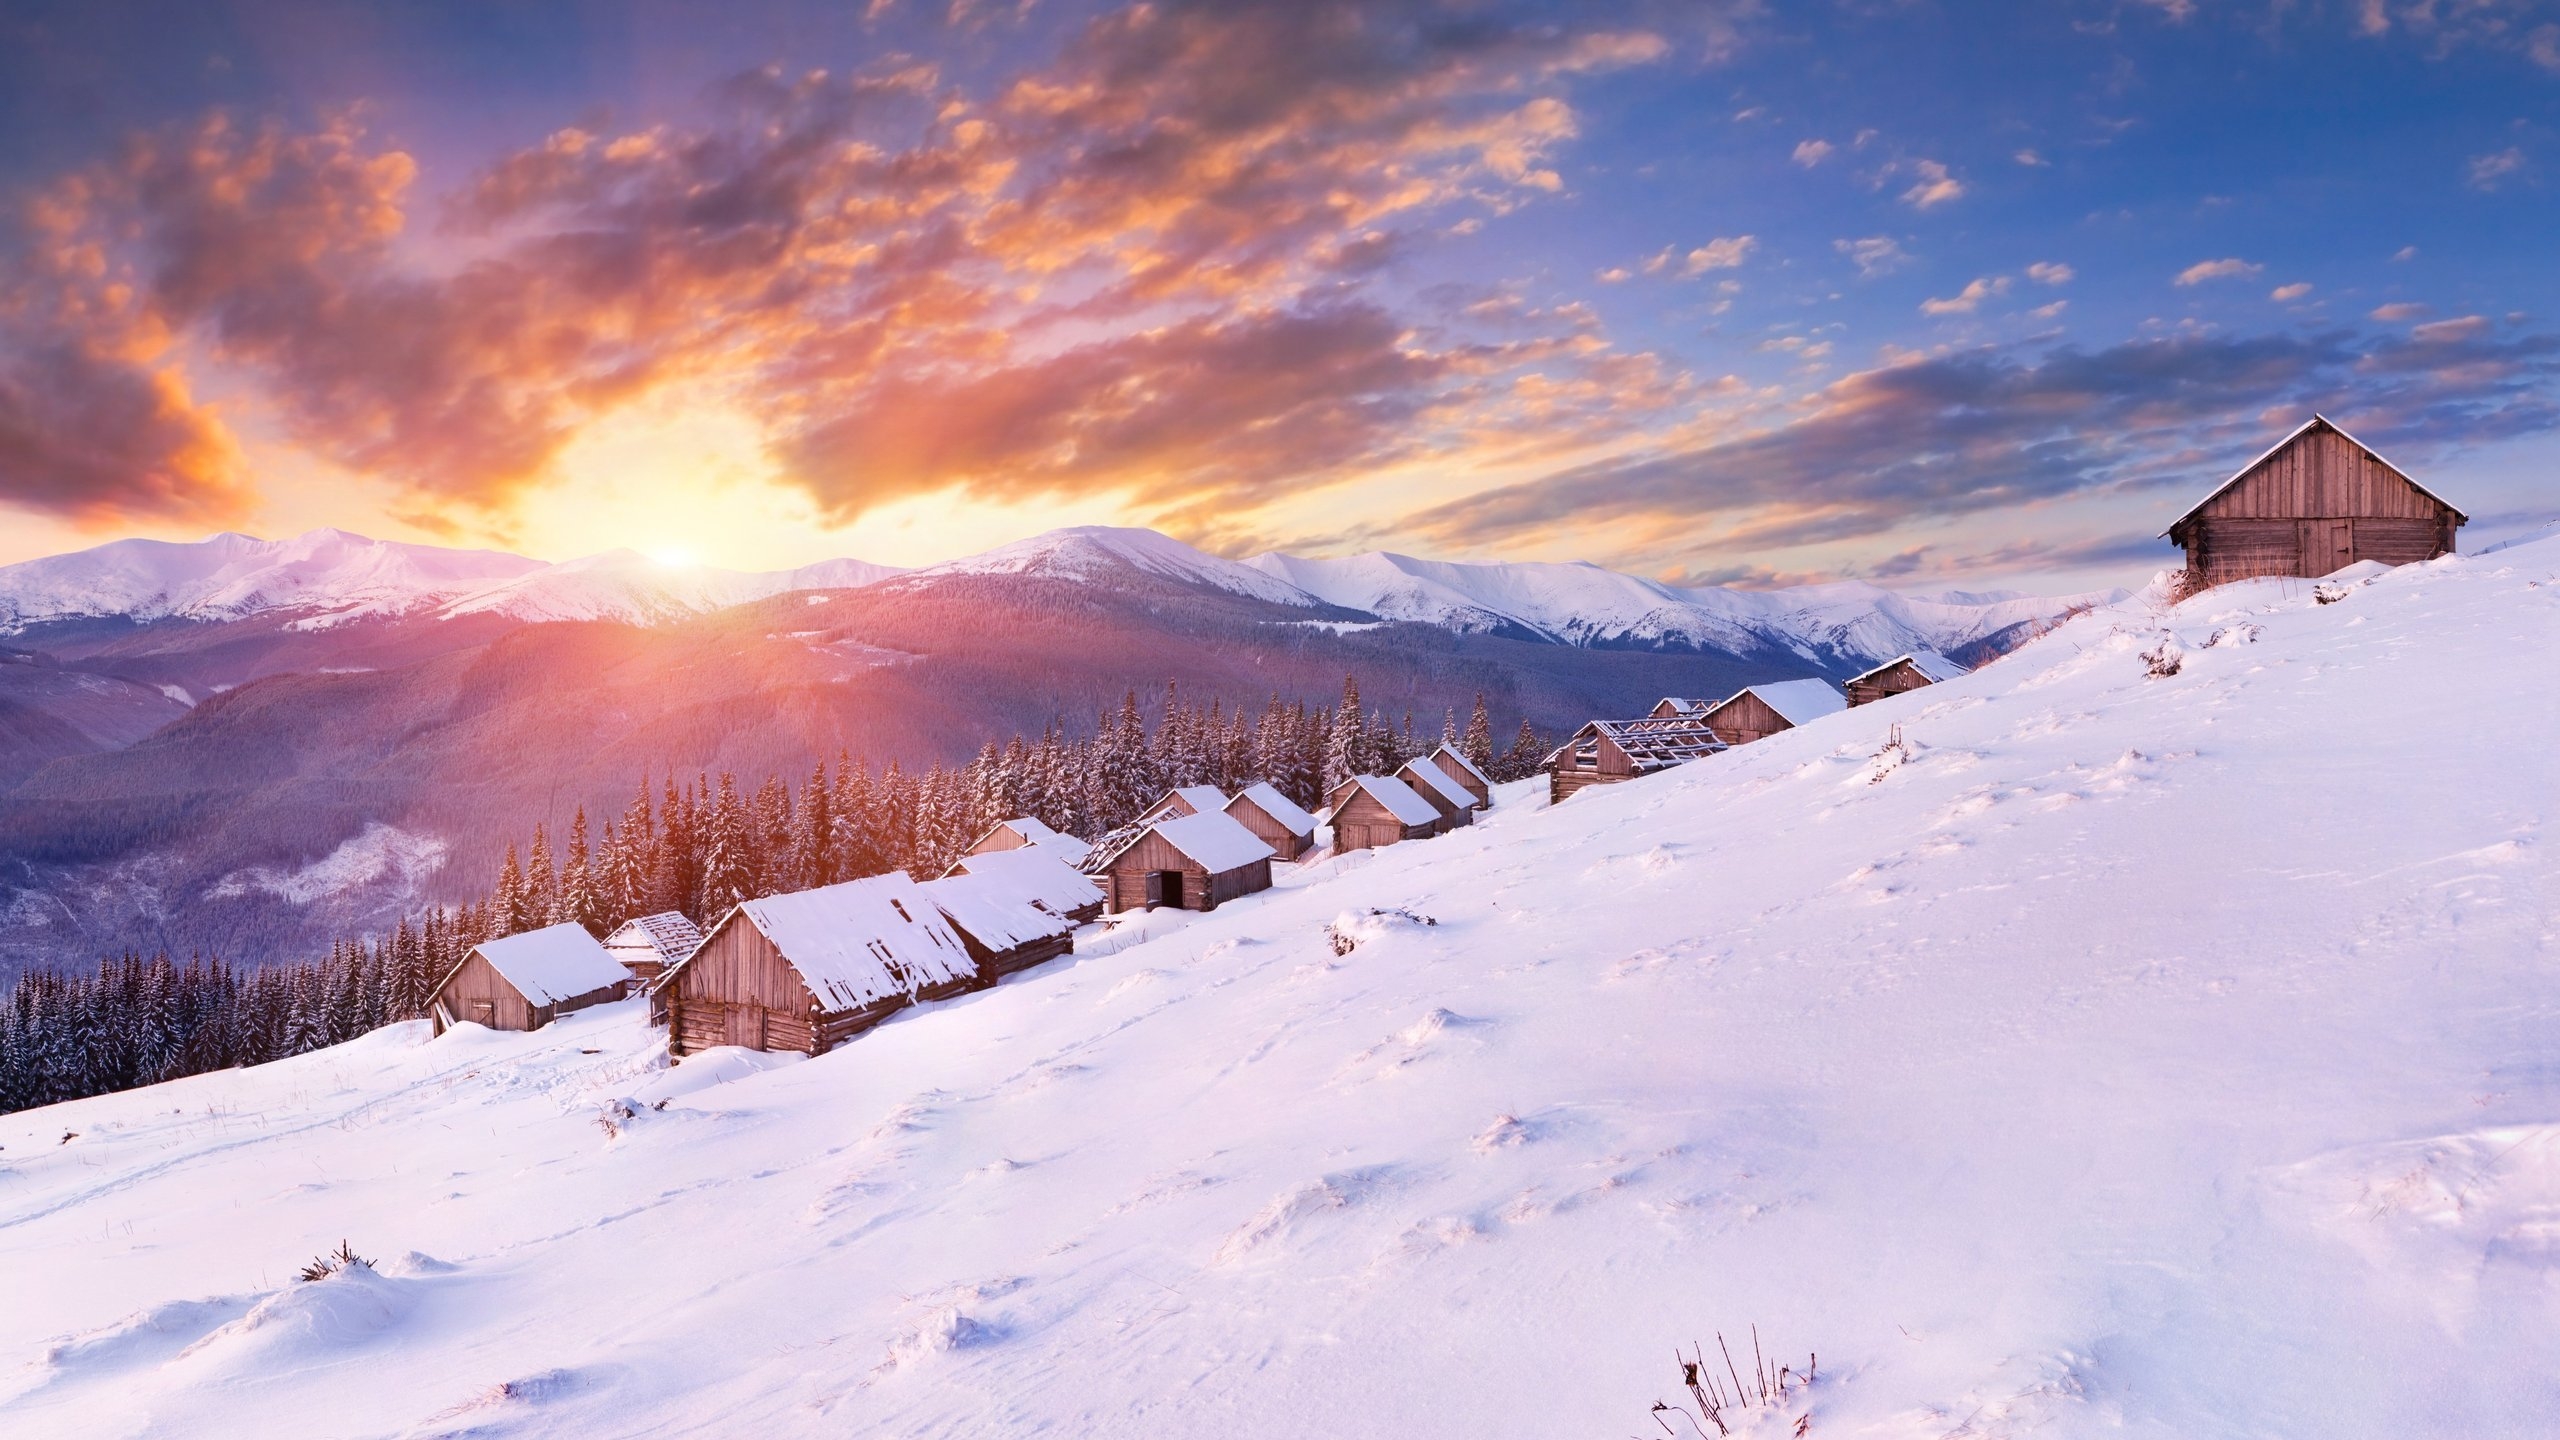 Winter Beautiful Sunset for 2560x1440 HDTV resolution